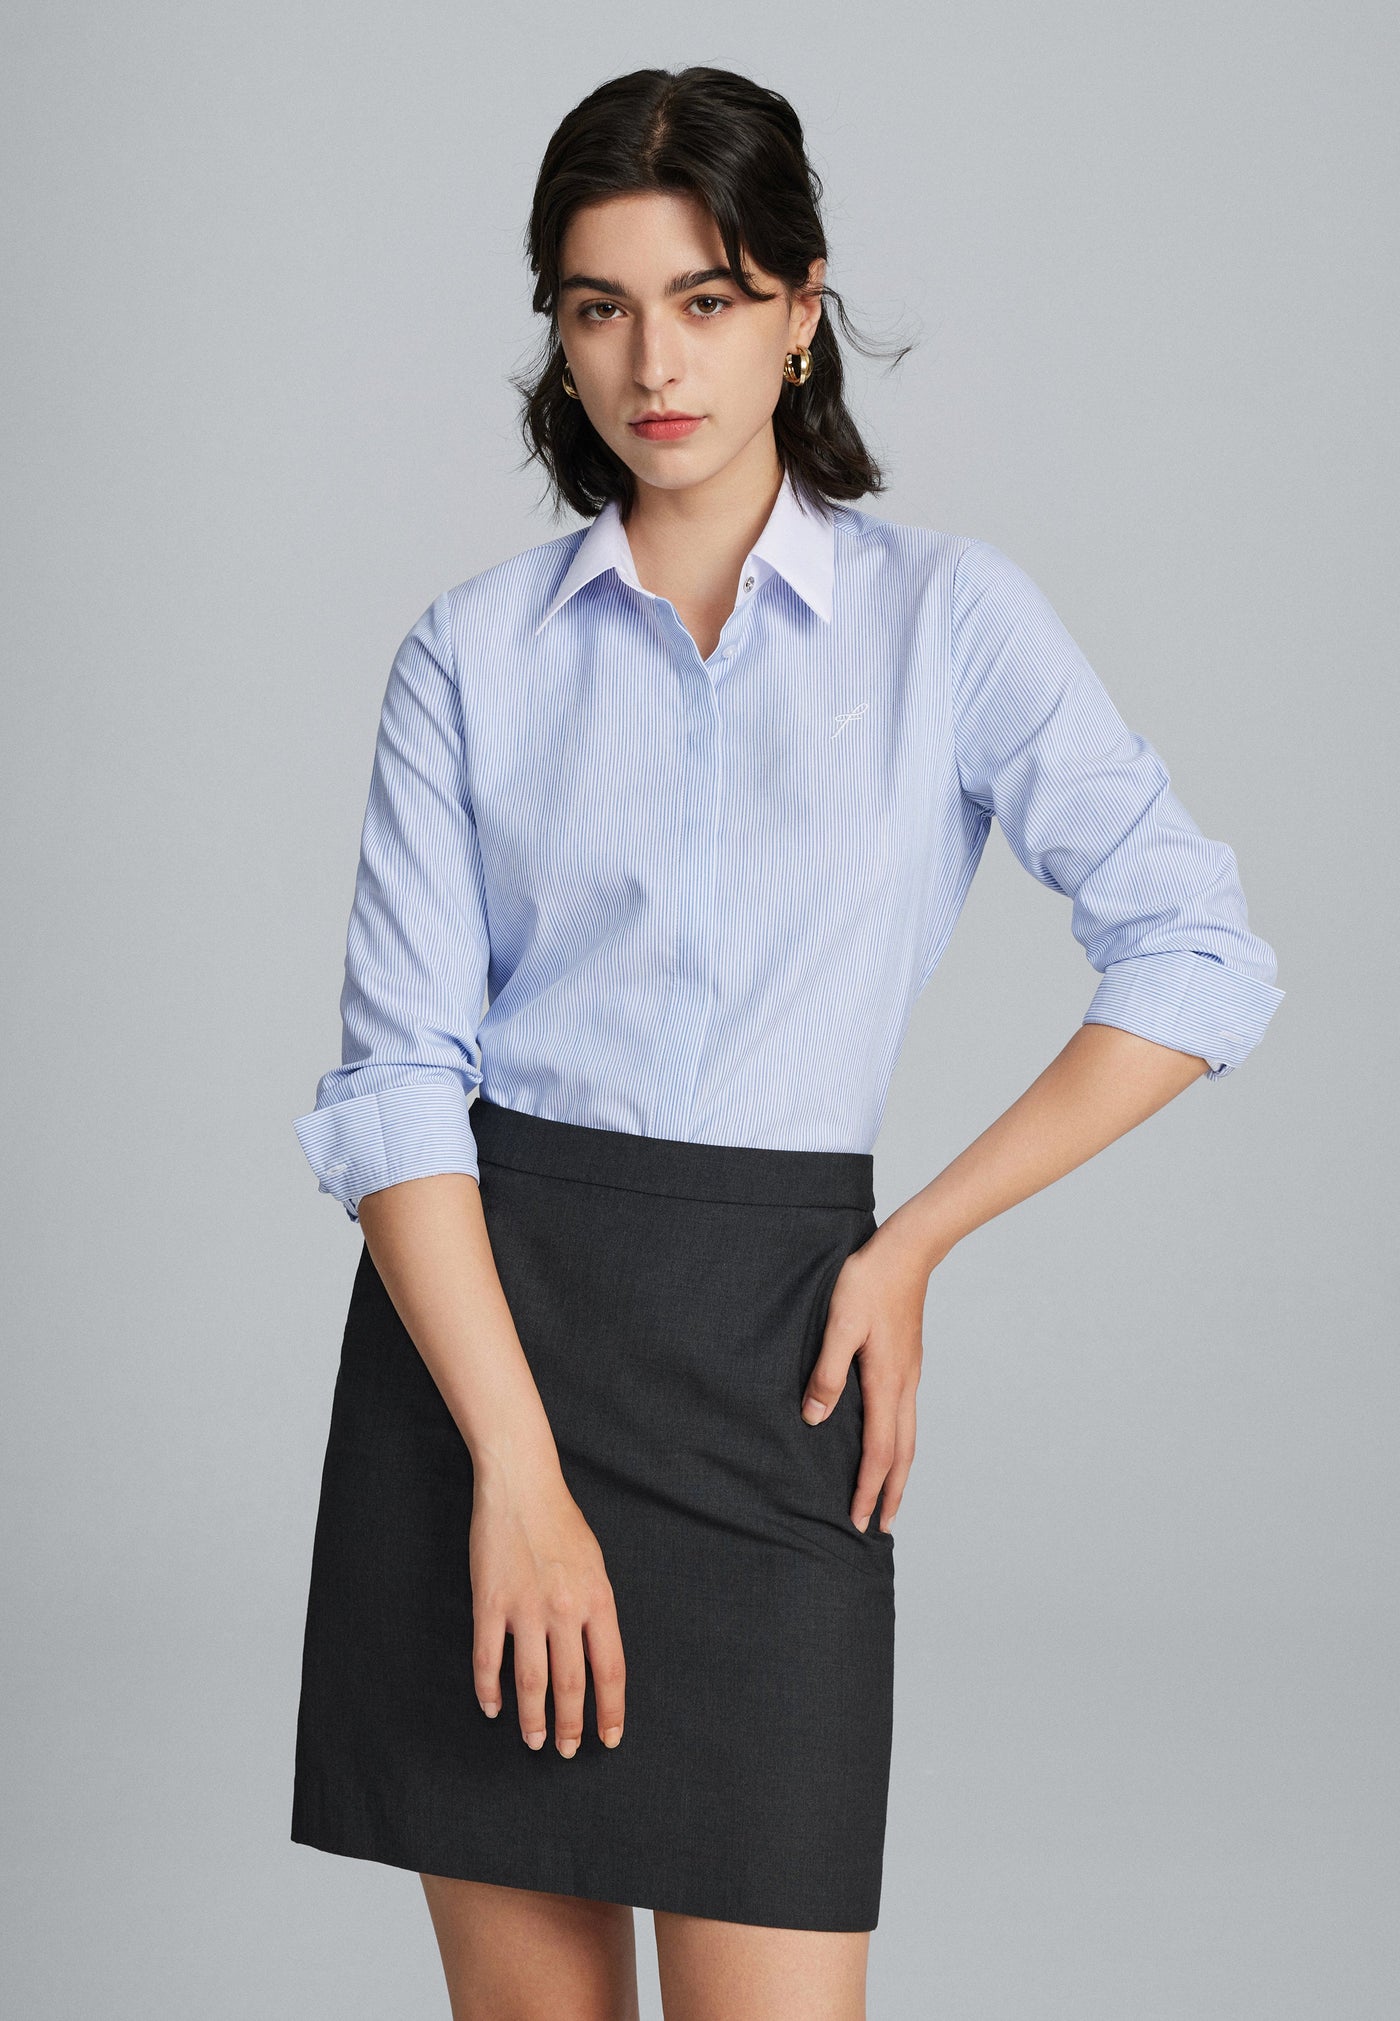 Women Clothing Drew Dry Formal Shirt - Regular Fit